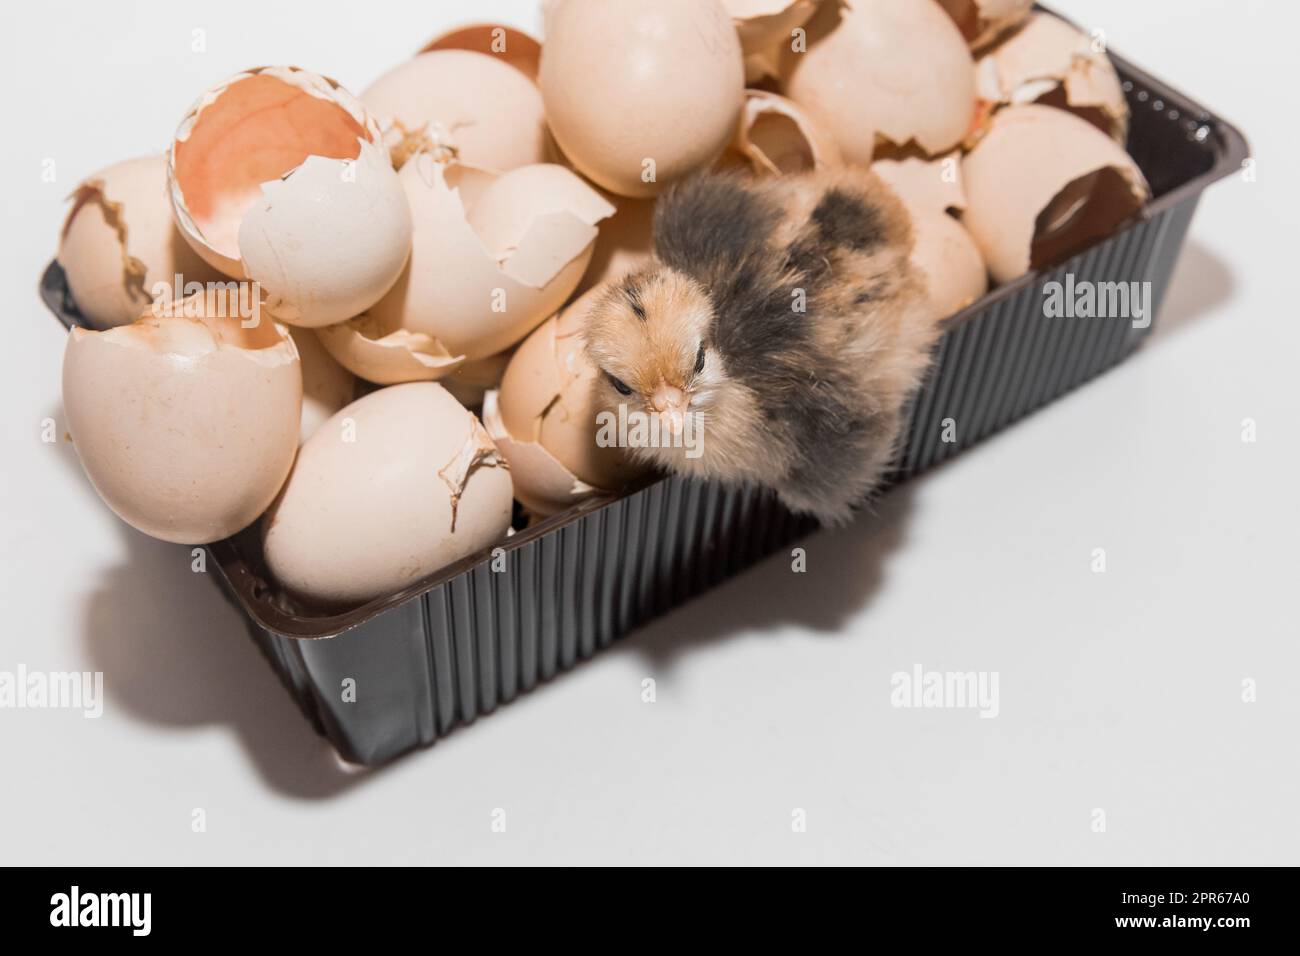 Newborn chicken little cute chick in eggshell pile on white background. Stock Photo